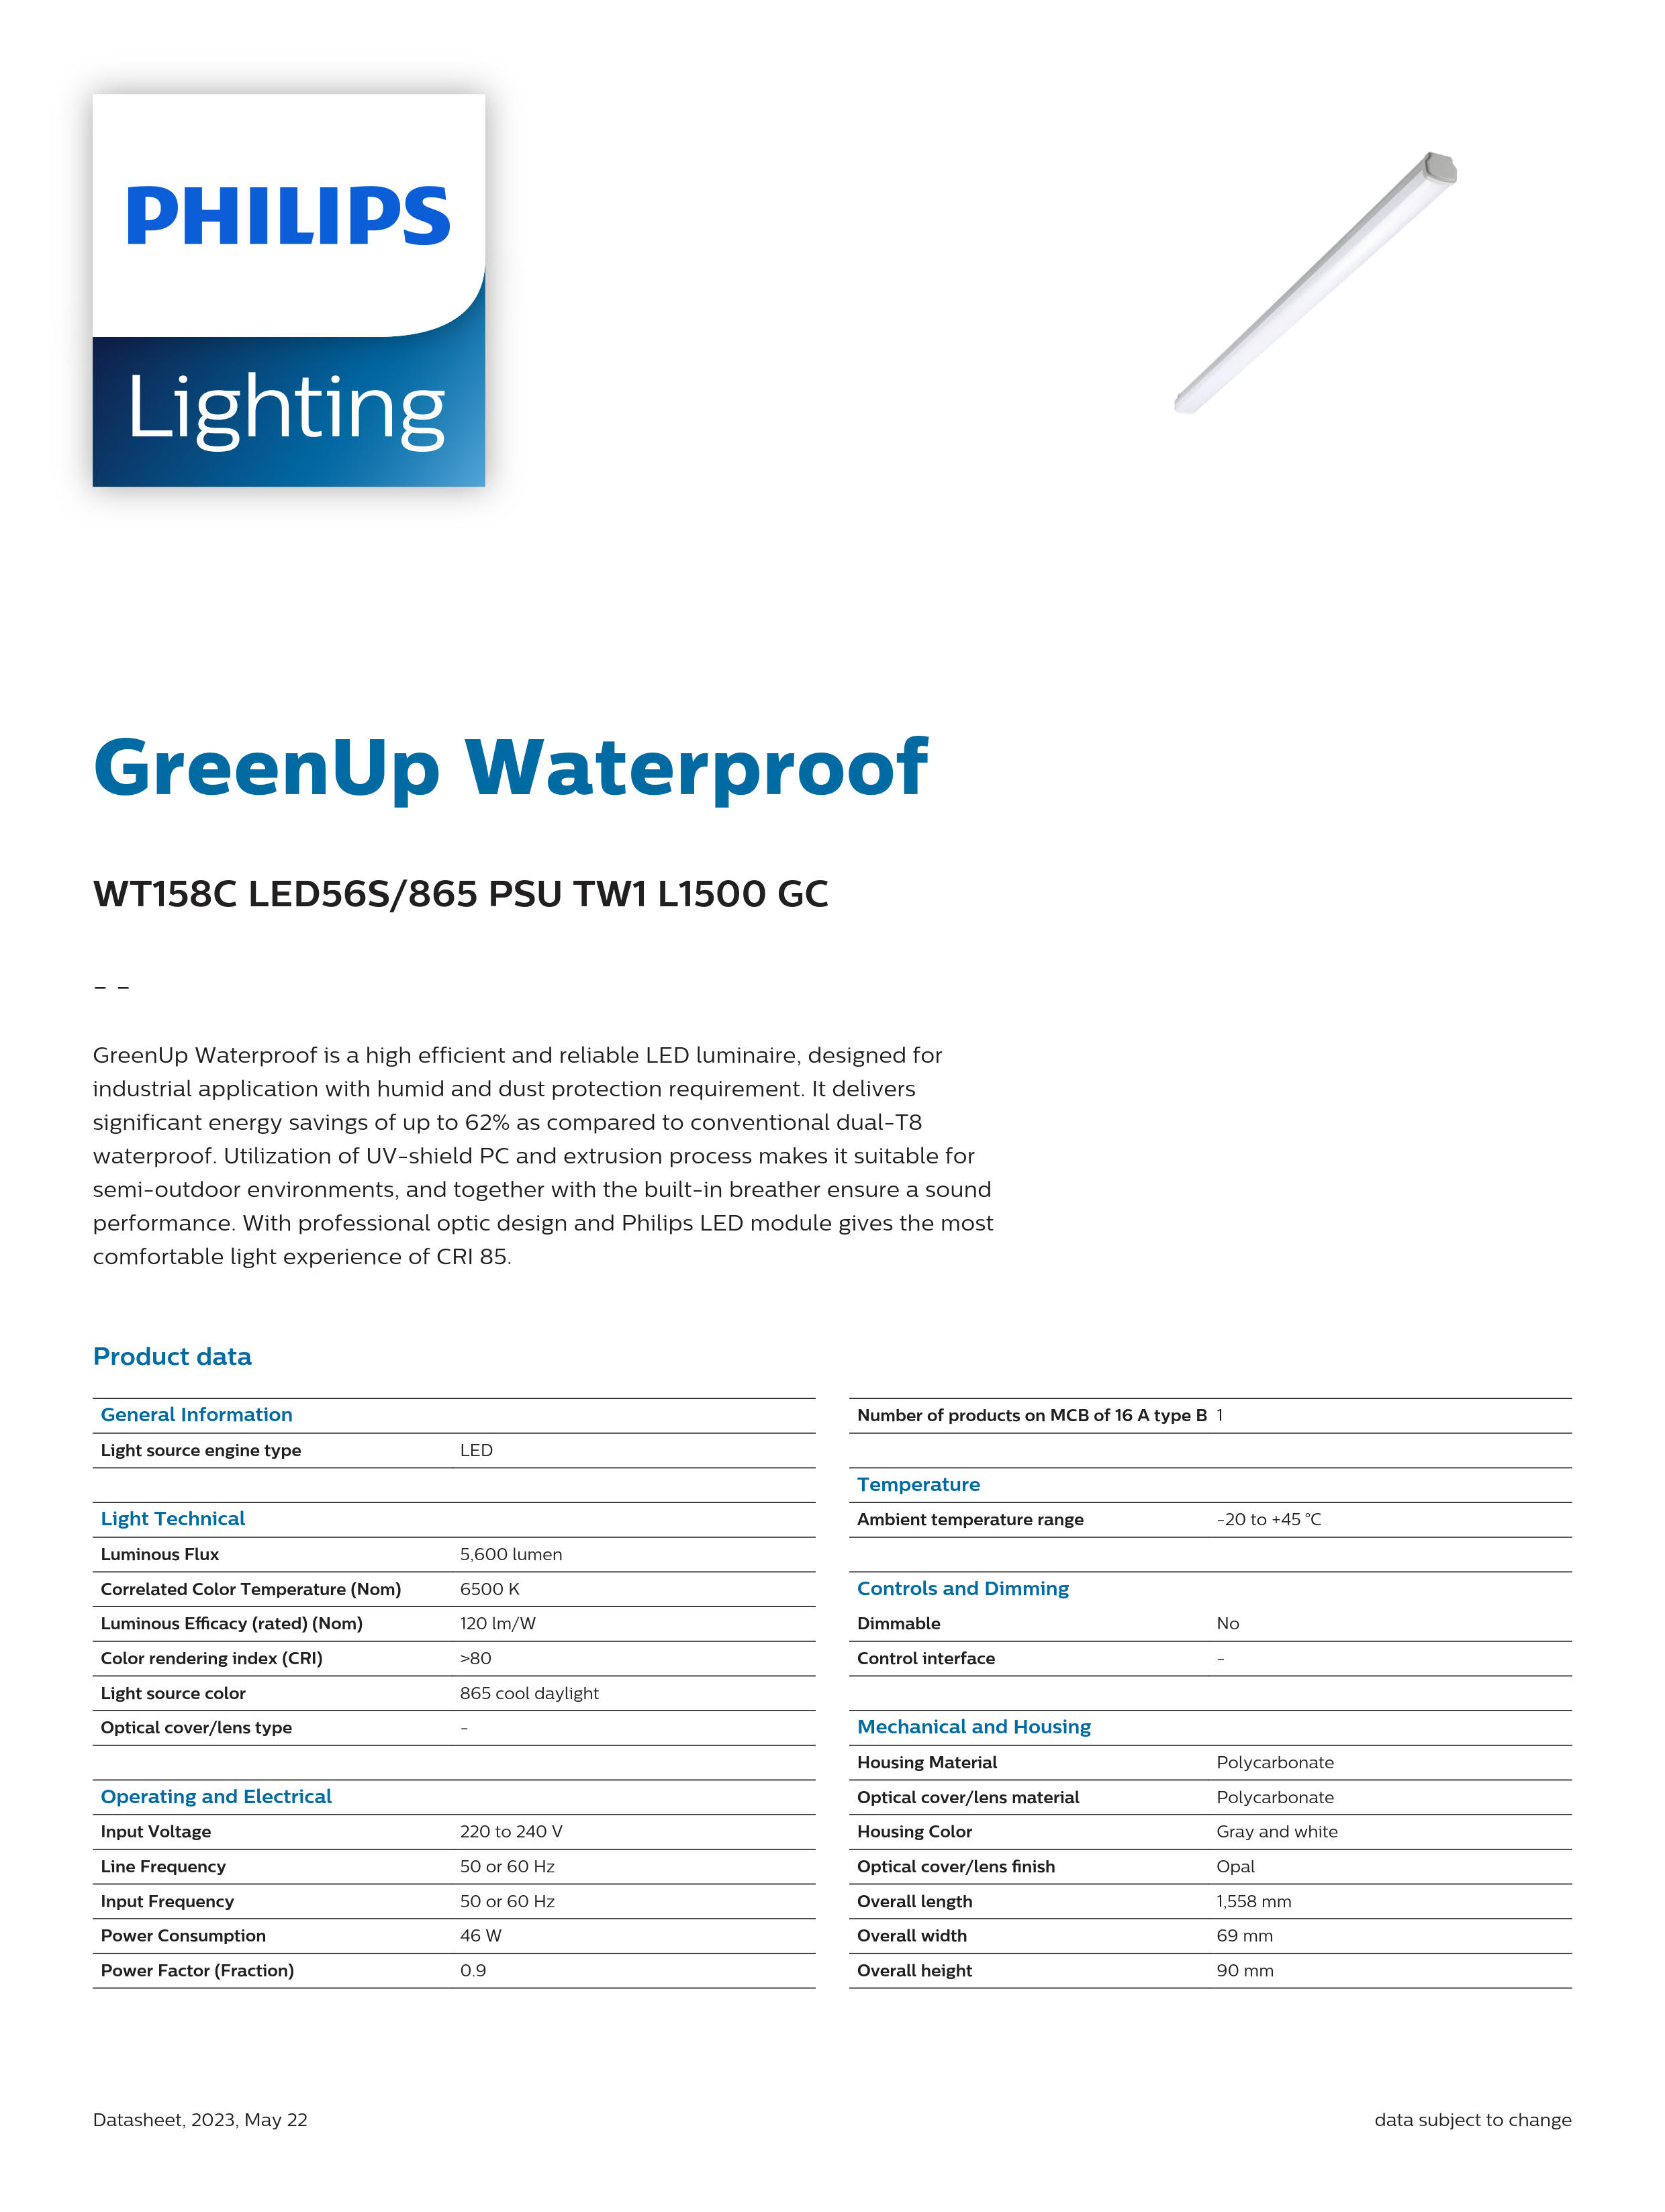 PHILIPS Waterproof WT158C LED56S/865 PSU TW1 L1500 GC 911401895080